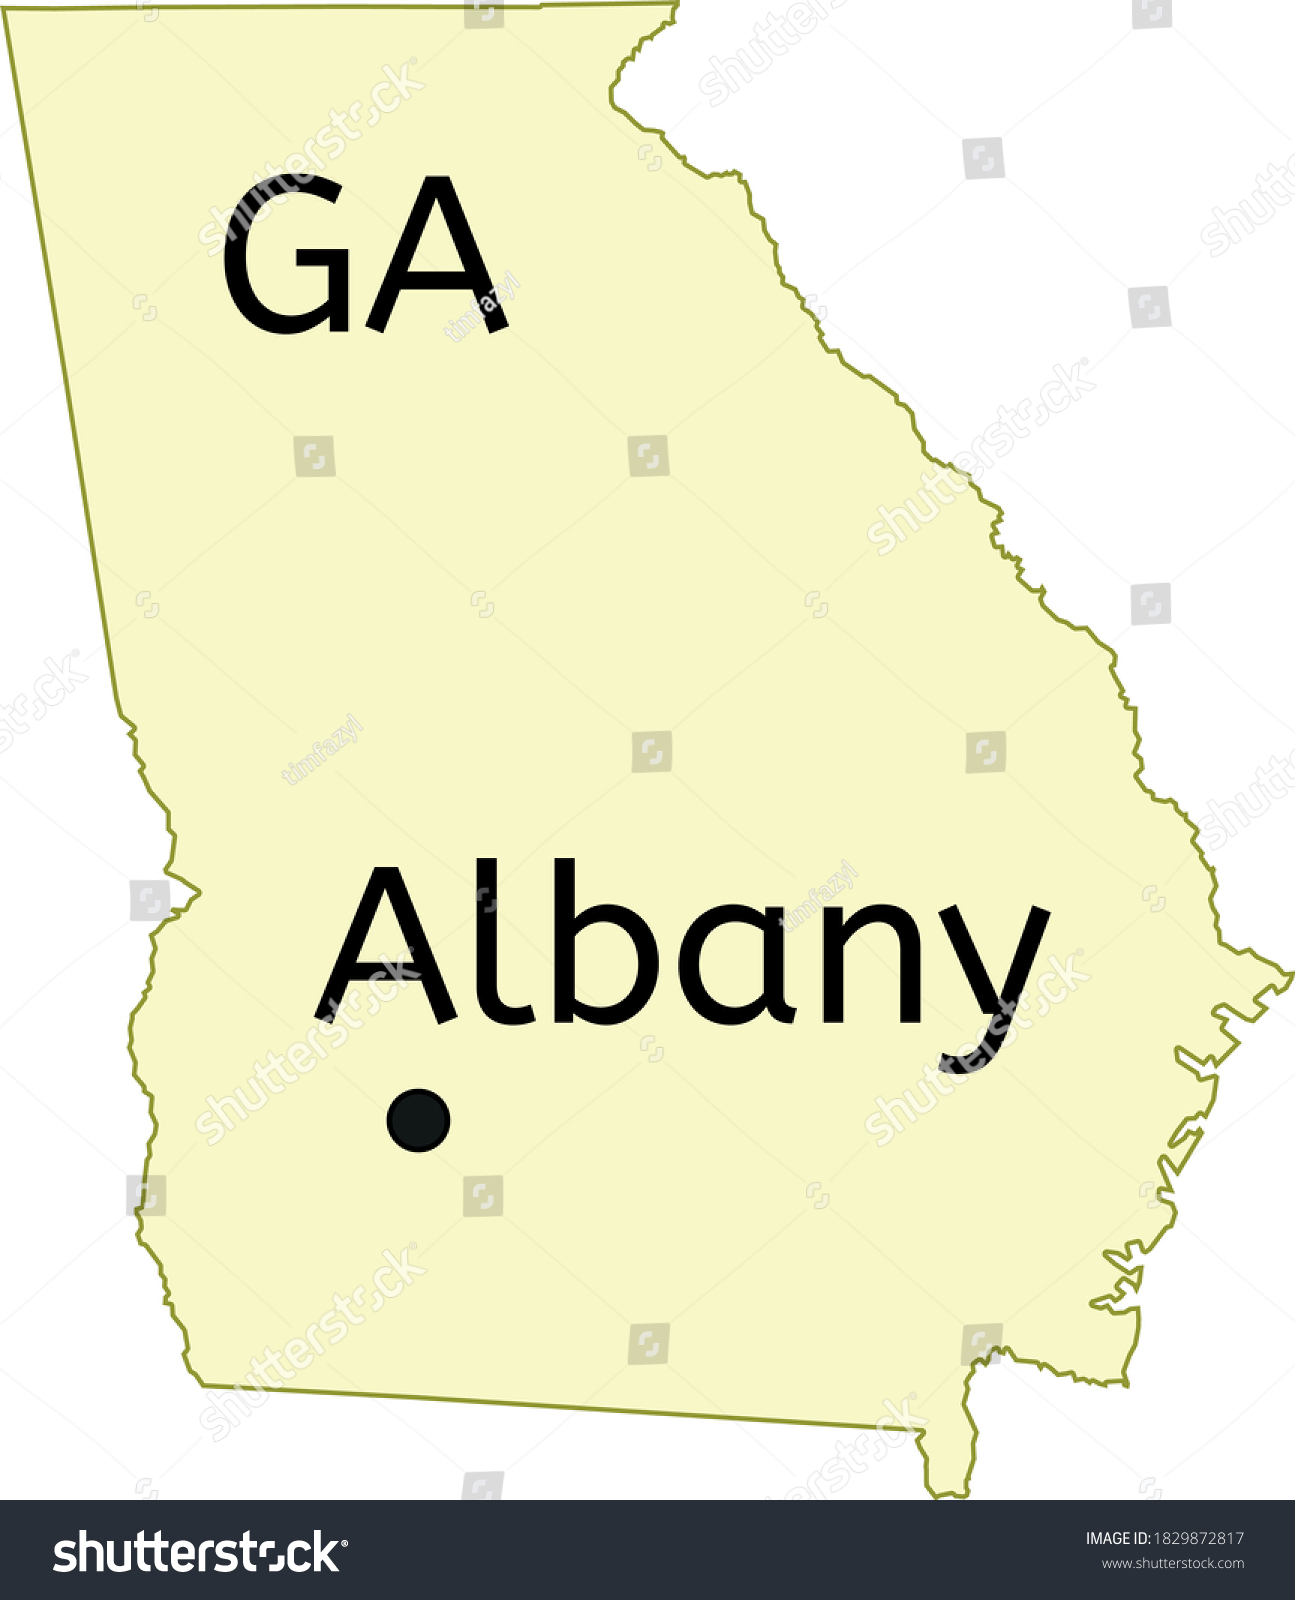 Albany City Location On Georgia Map Royalty Free Stock Vector 1829872817 3559